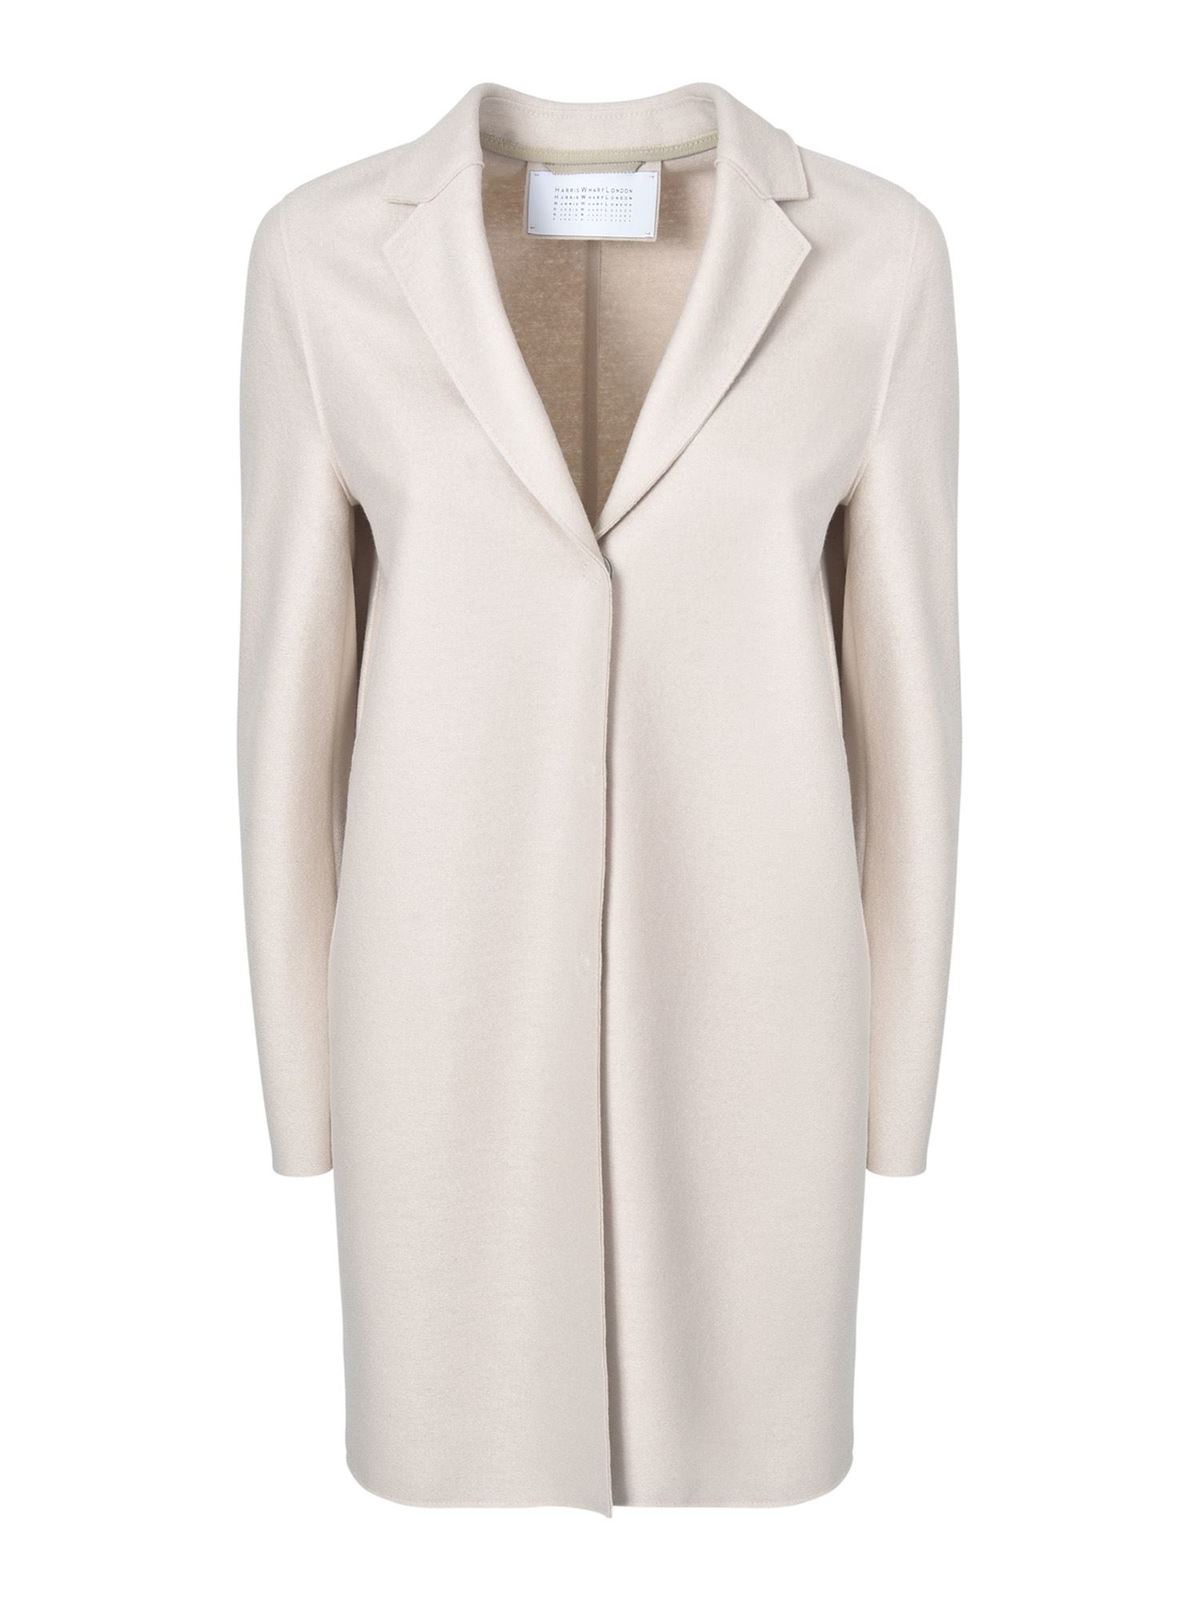 Harris Wharf London - Oval shape coat in cream color - knee length ...